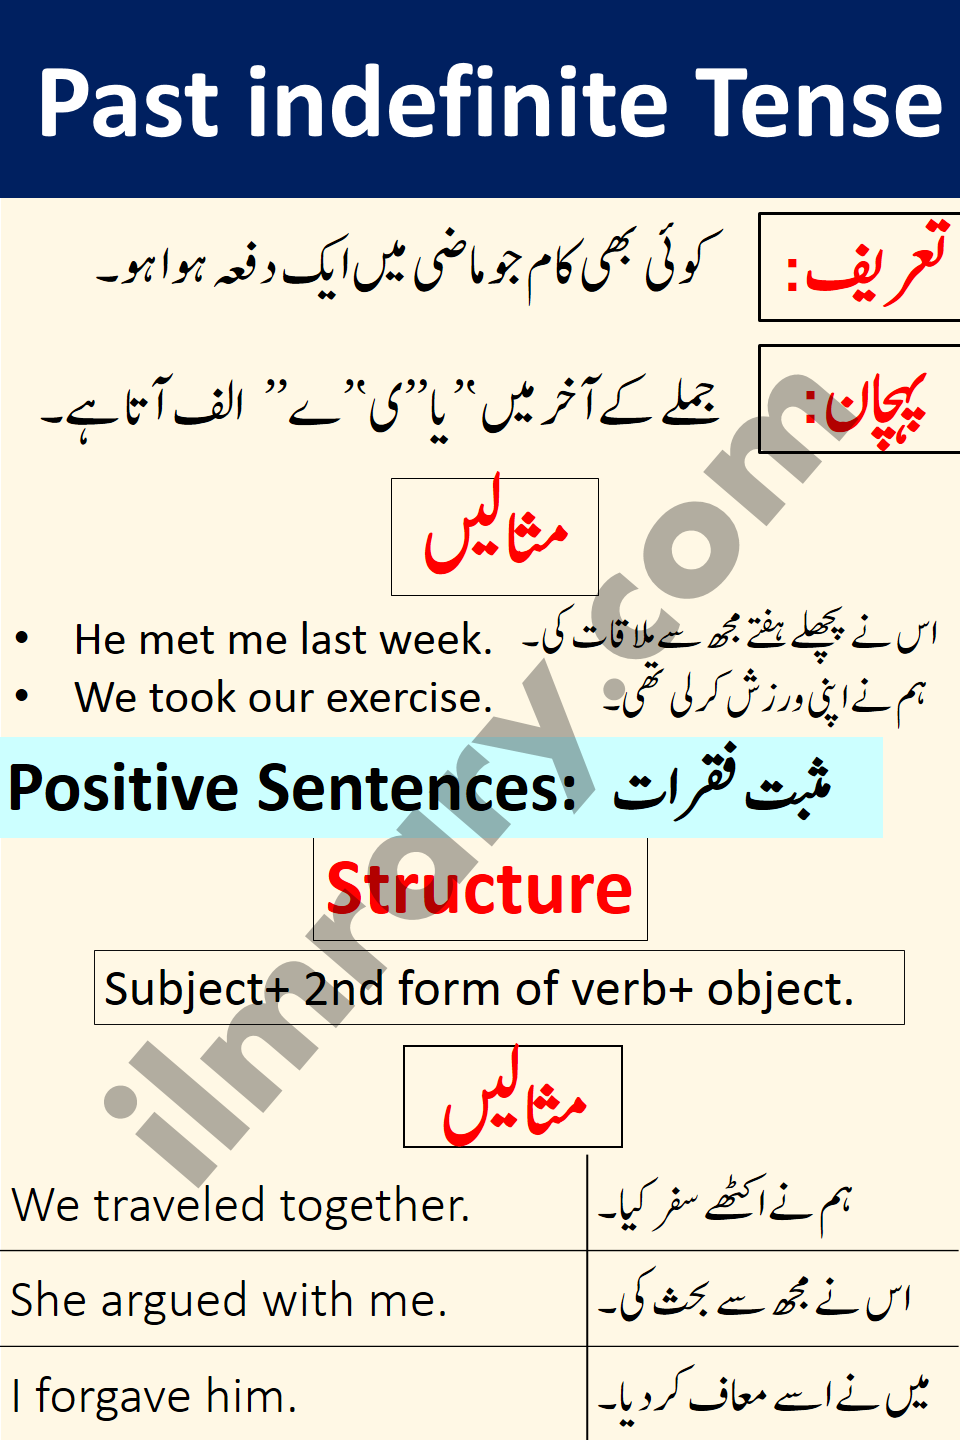 Positive Sentences for Past indefinite Tense in Urdu